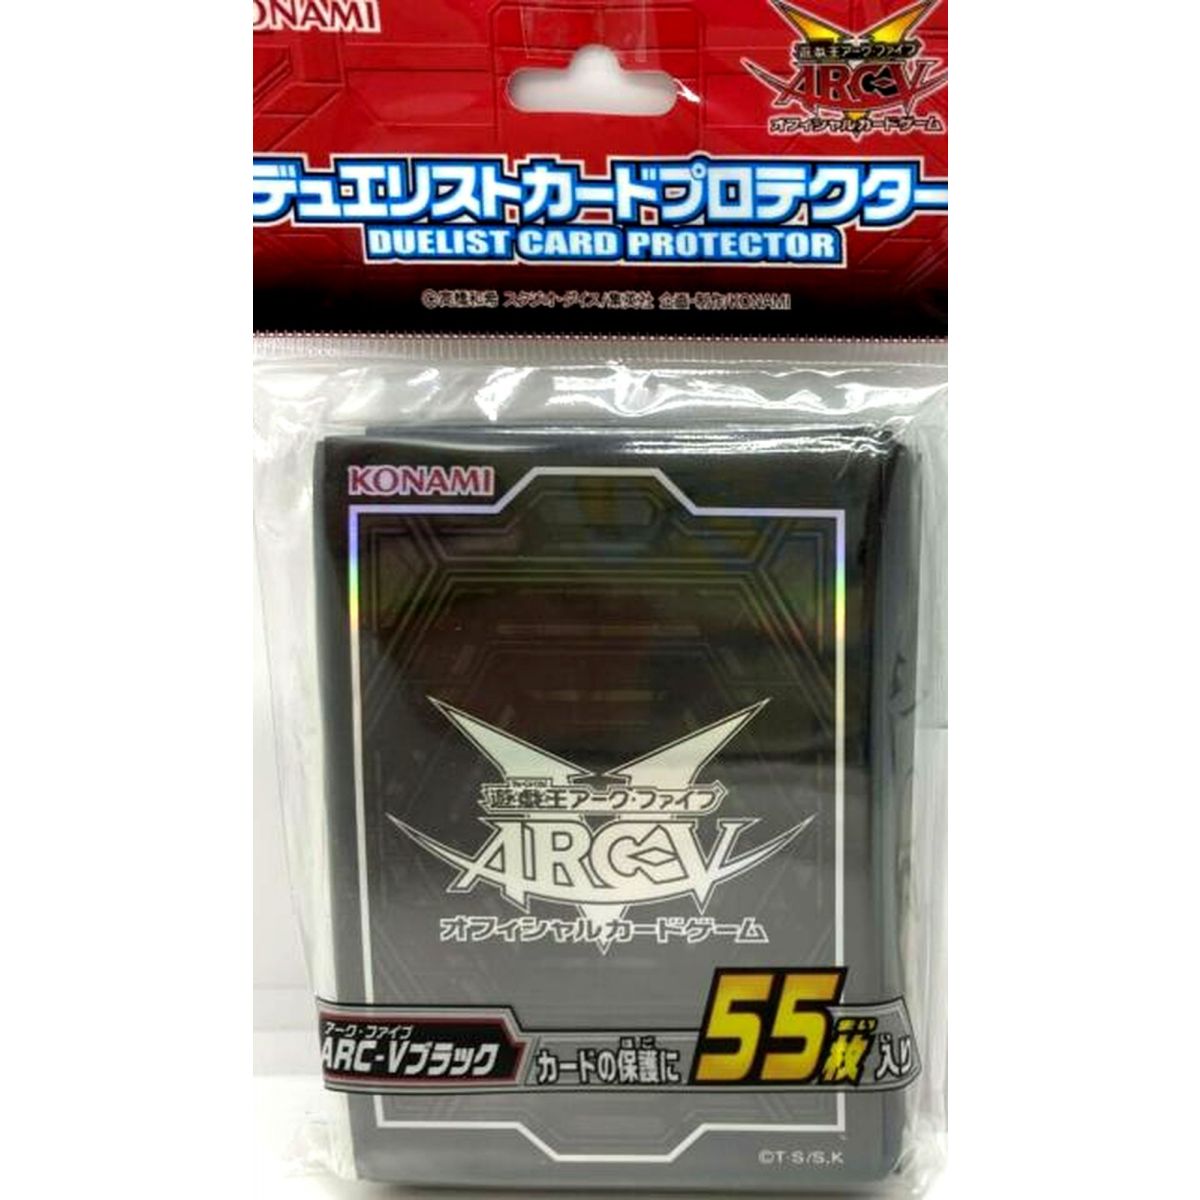 Item Yu Gi Oh! - Card Protectors - Arc-V Black Card Protector (55) - OCG